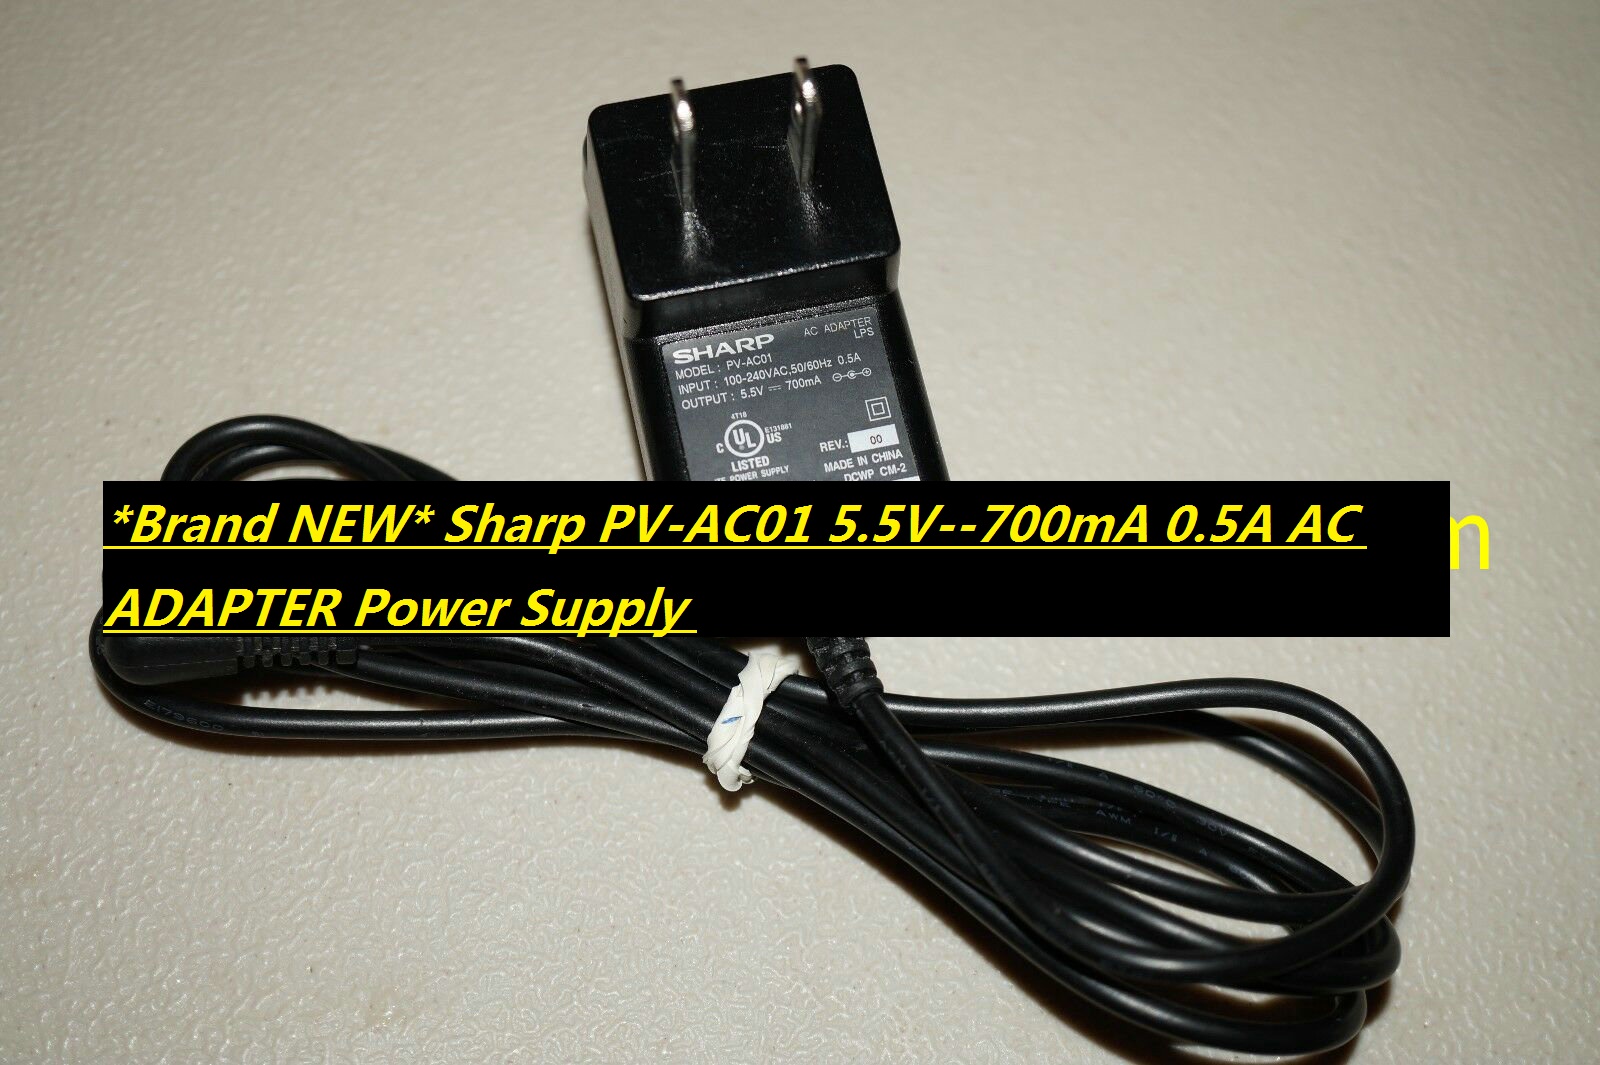 *Brand NEW* Sharp PV-AC01 5.5V--700mA 0.5A AC ADAPTER Power Supply